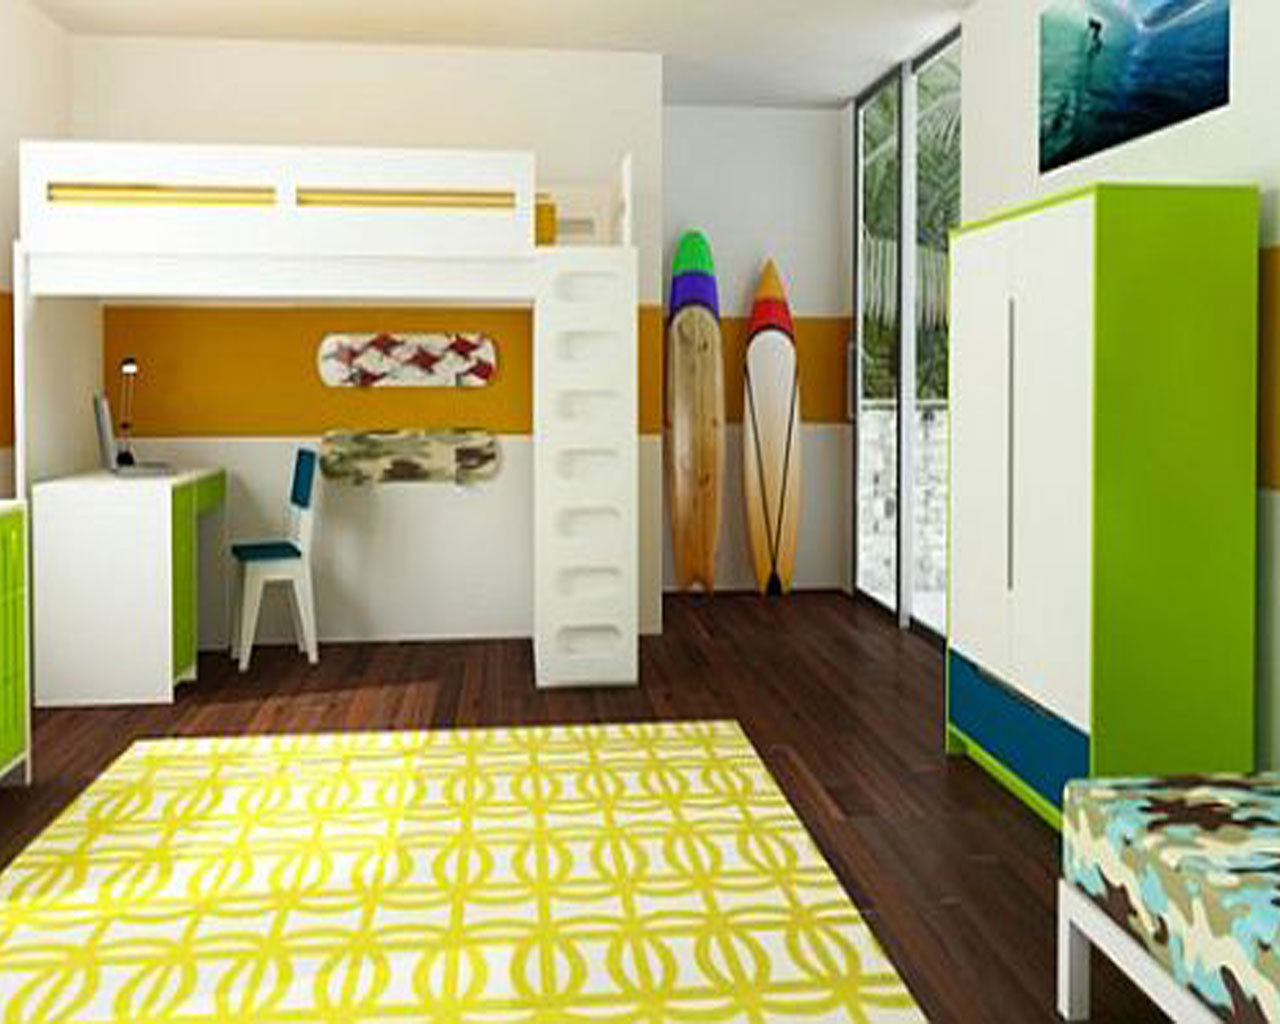  decor ideas for kids rooms wallpaper modern decor ideas for kids rooms 1280x1024